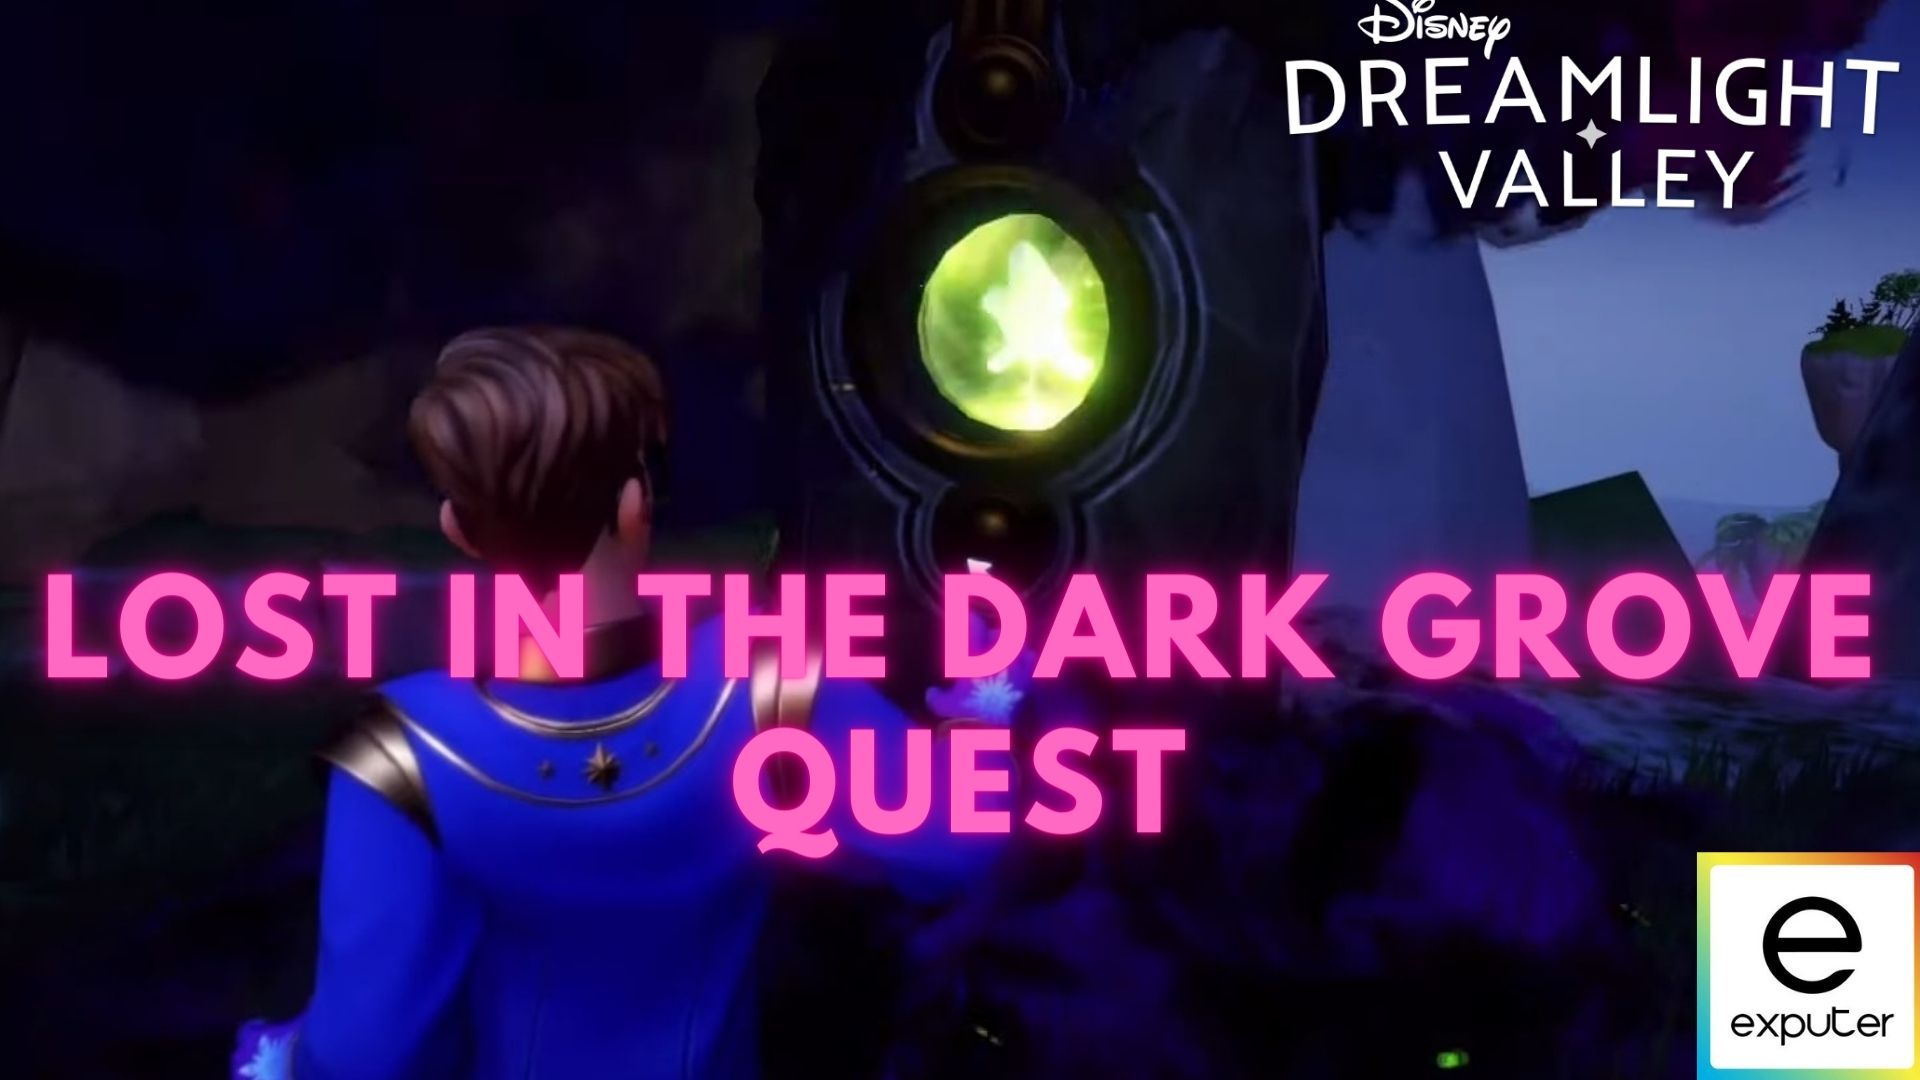 Lost In The Dark Grove Quest in Disney Dreamlight Valley